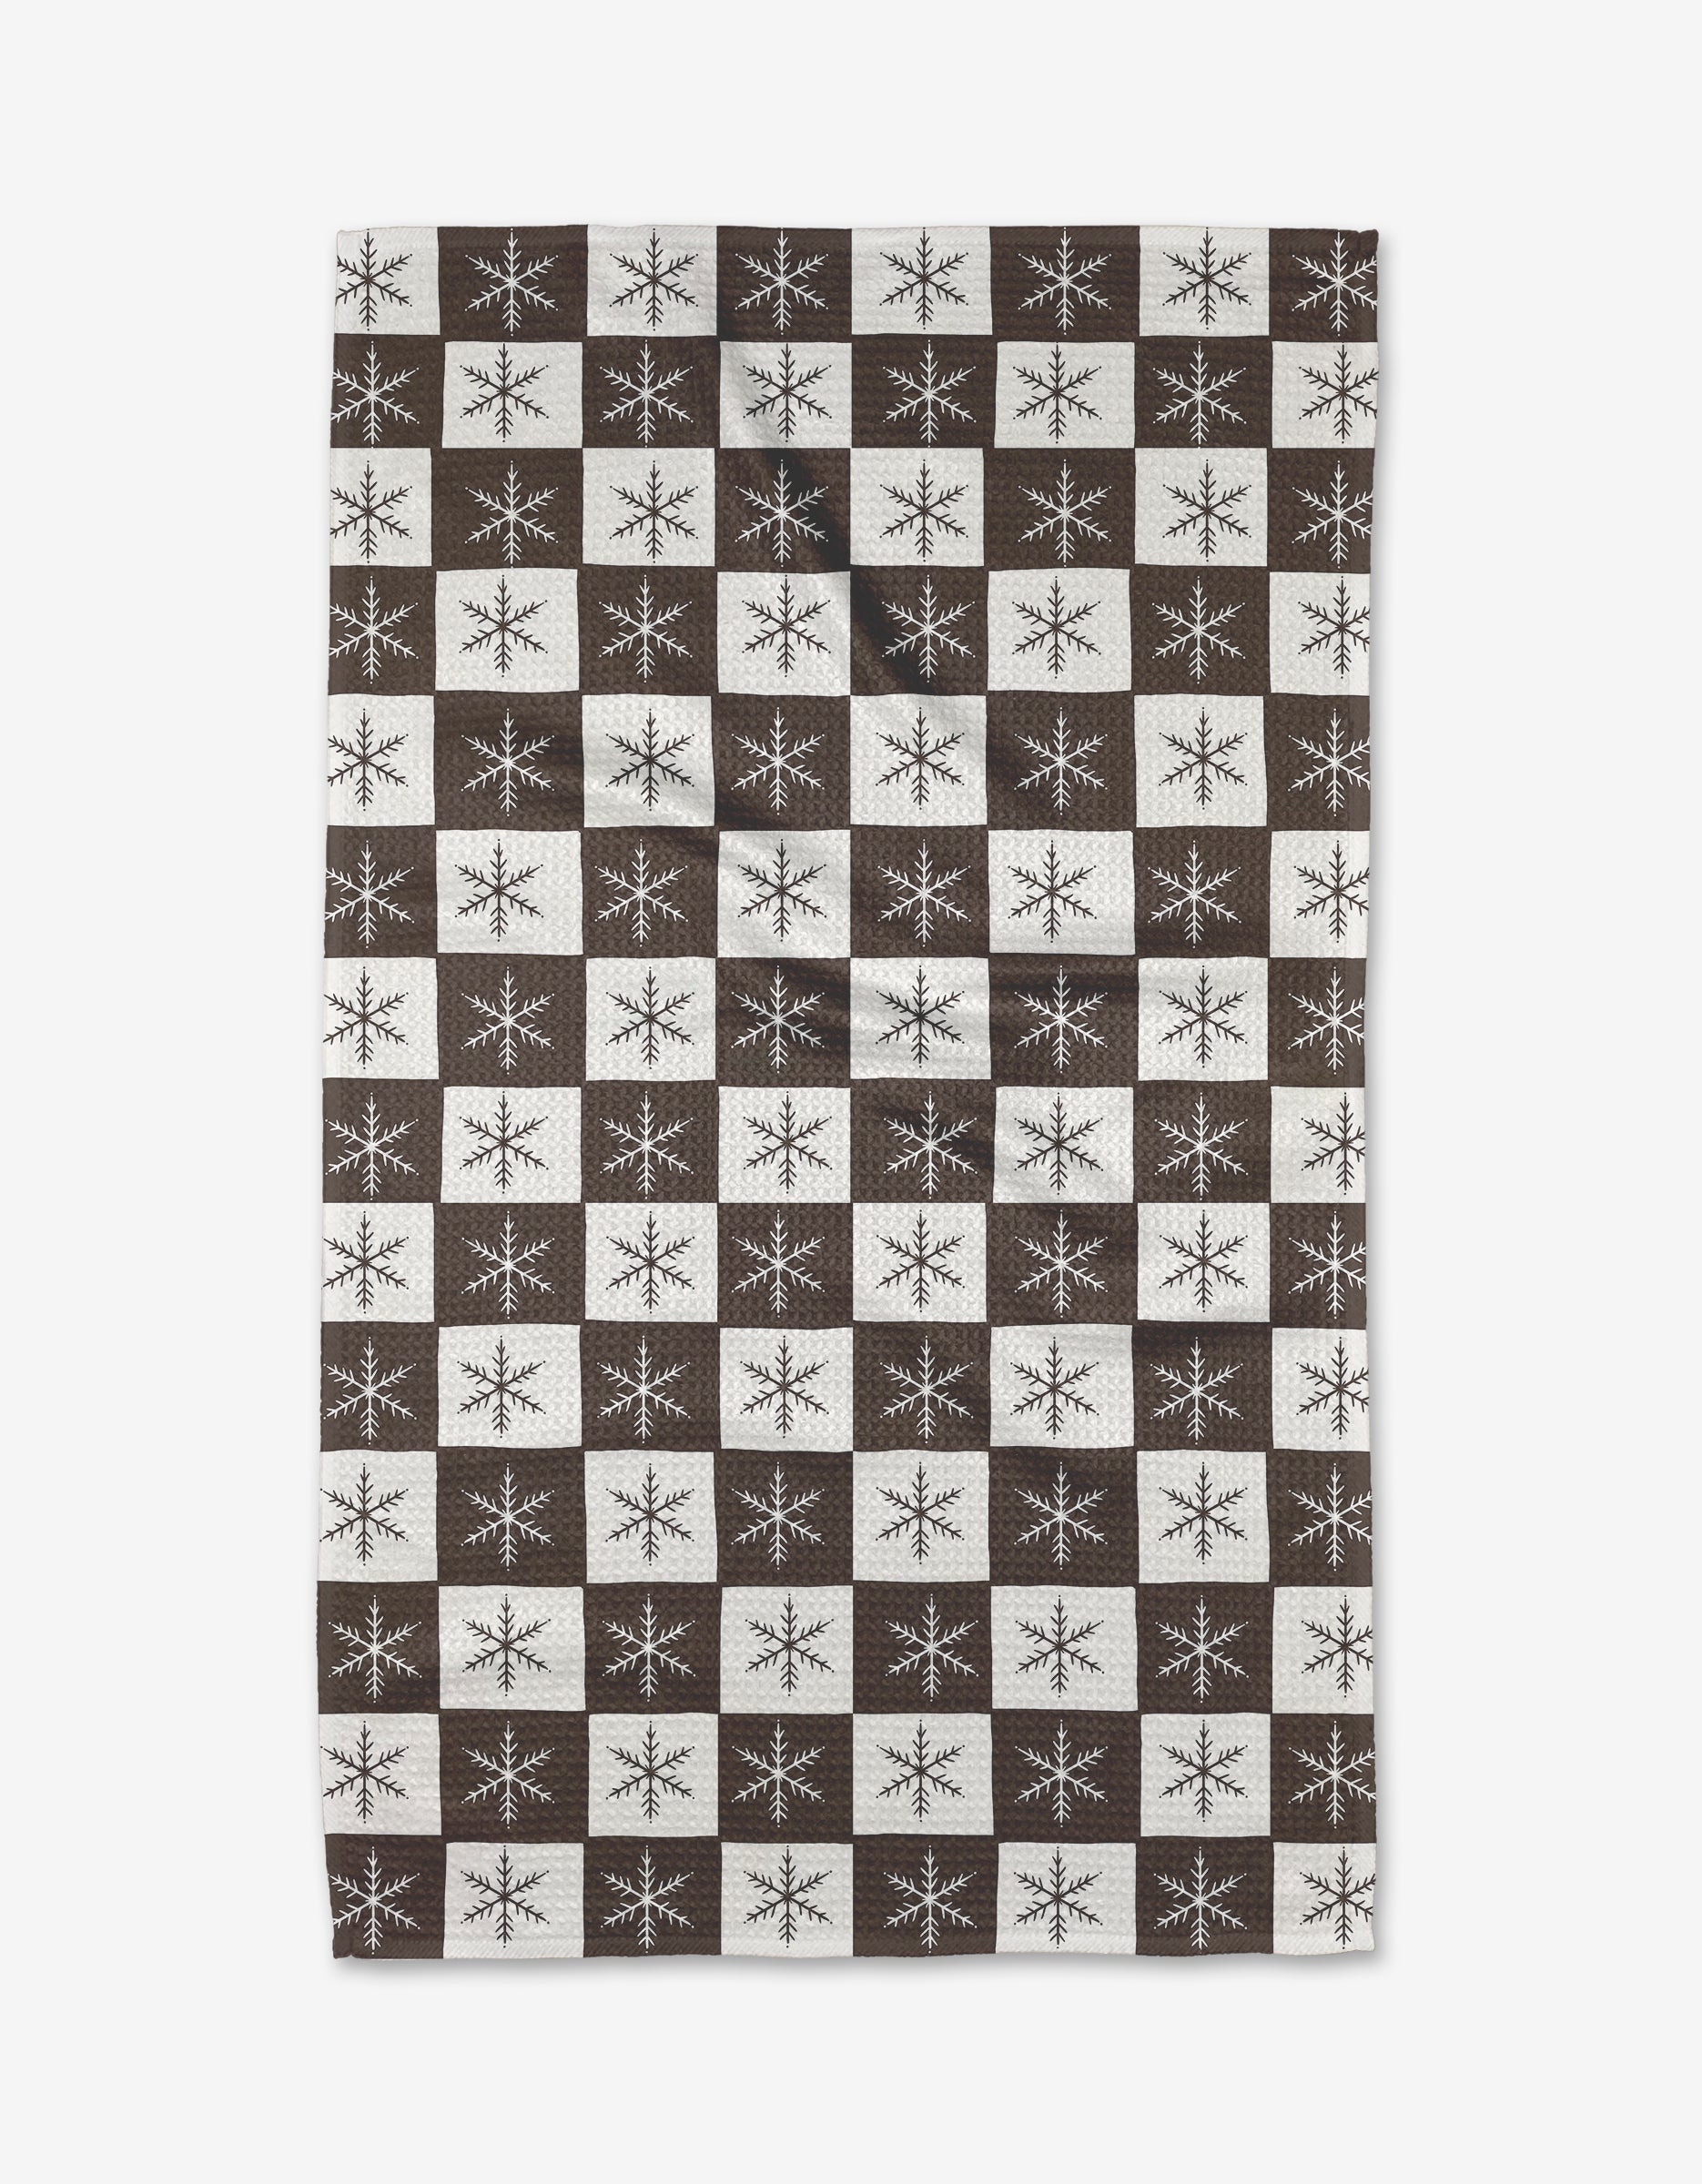 Geometry House - One Thousand Kitchen Tea Towel